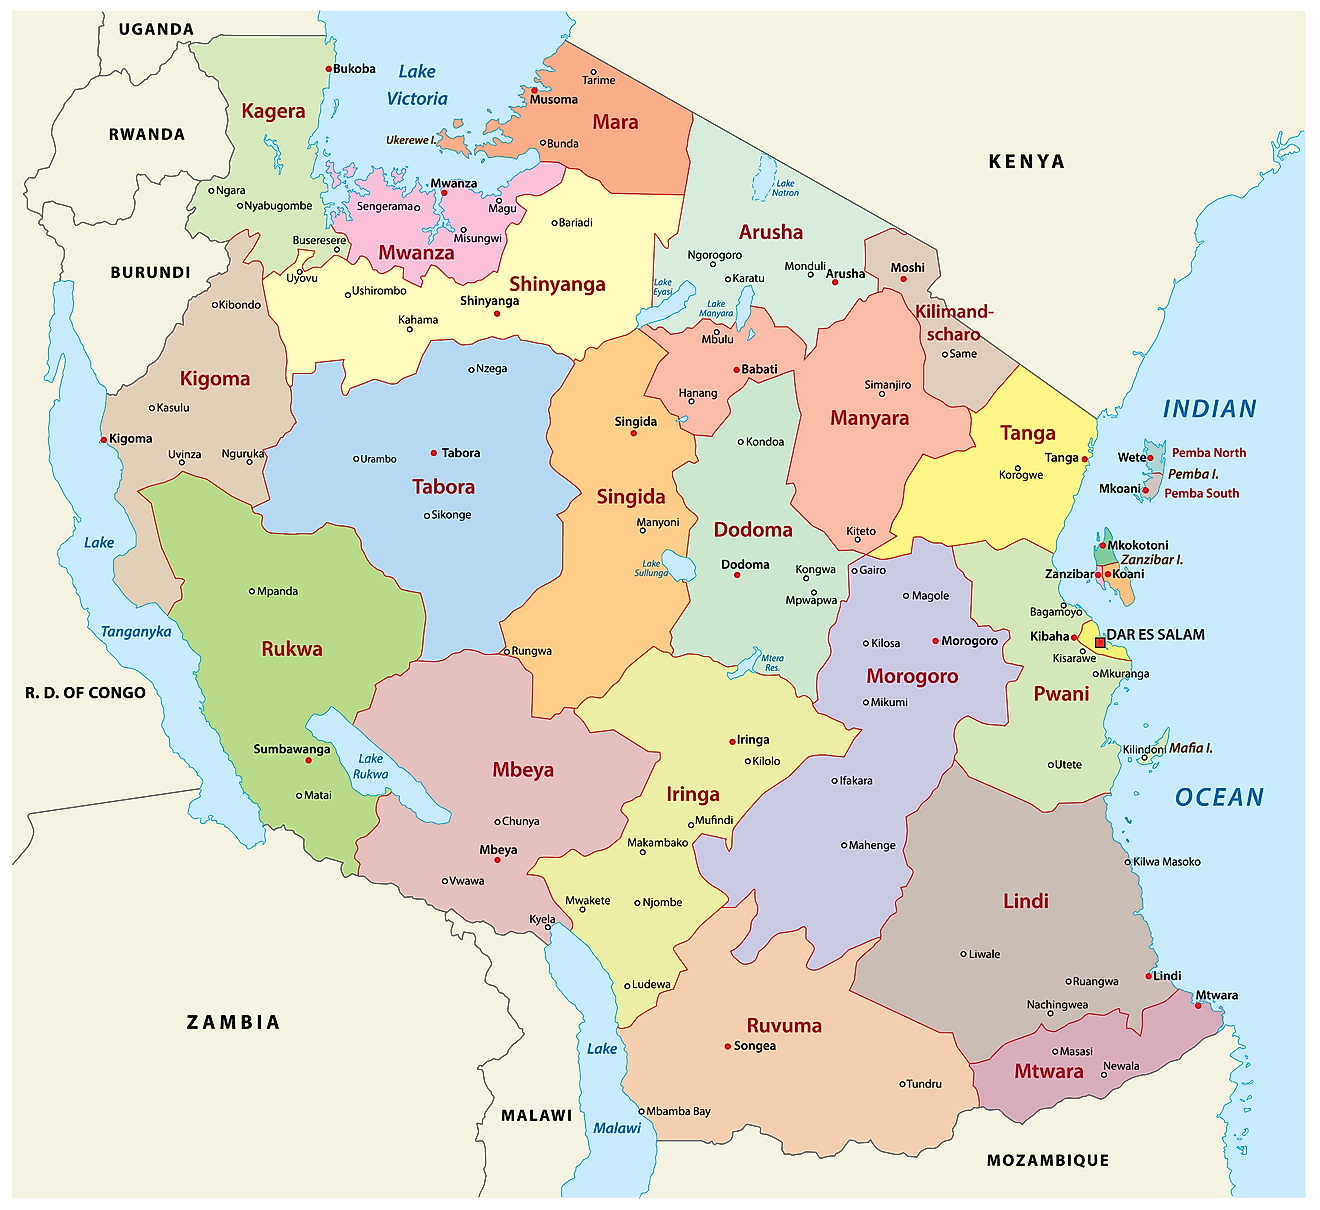 Printable Vector Map of Tanzania - Sketch | Free Vector Maps